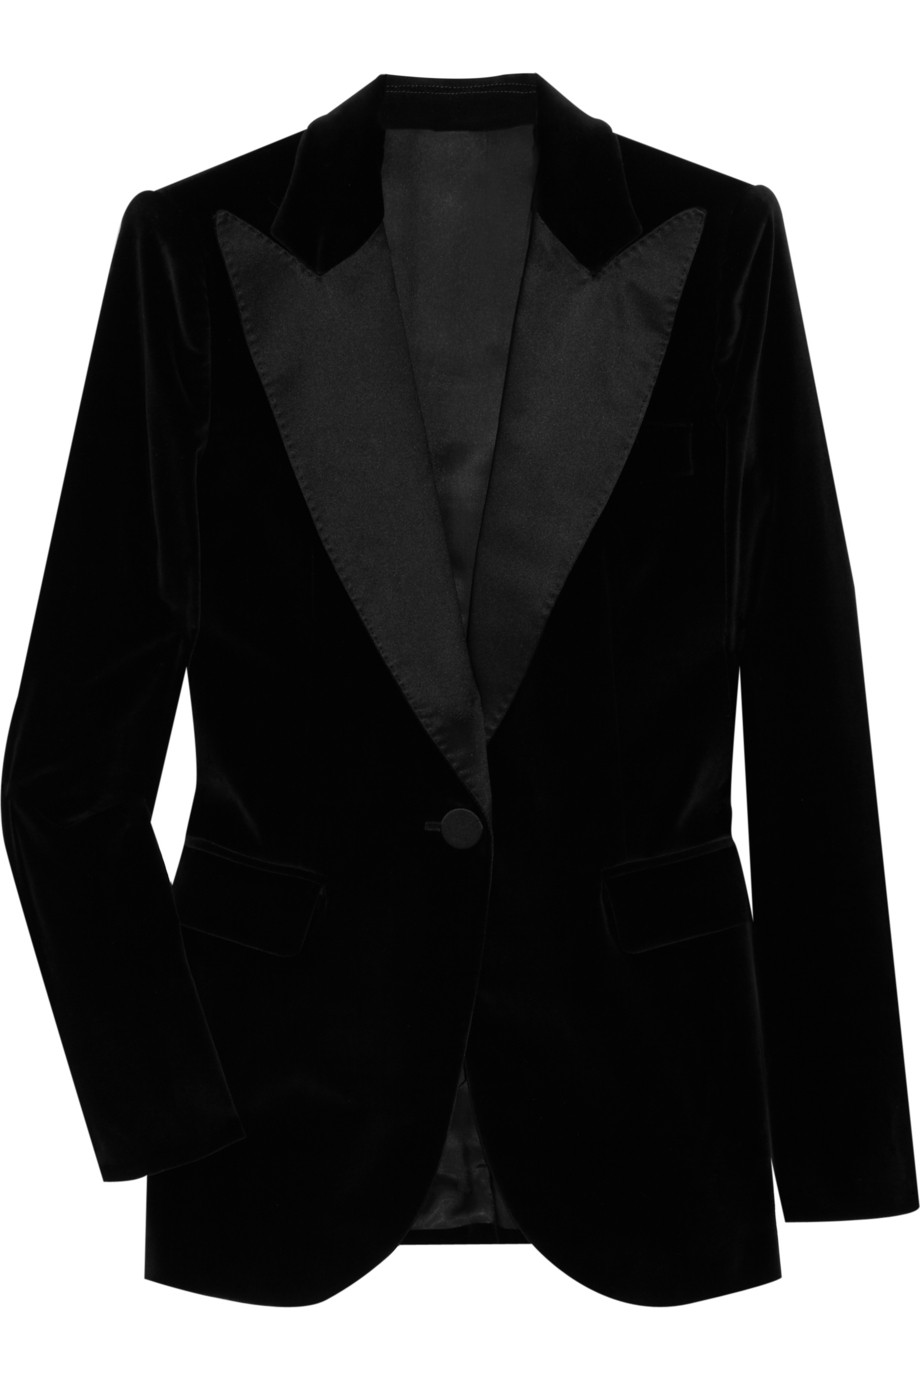 Giambattista Valli Satin-trimmed Velvet Tuxedo Jacket in Black | Lyst